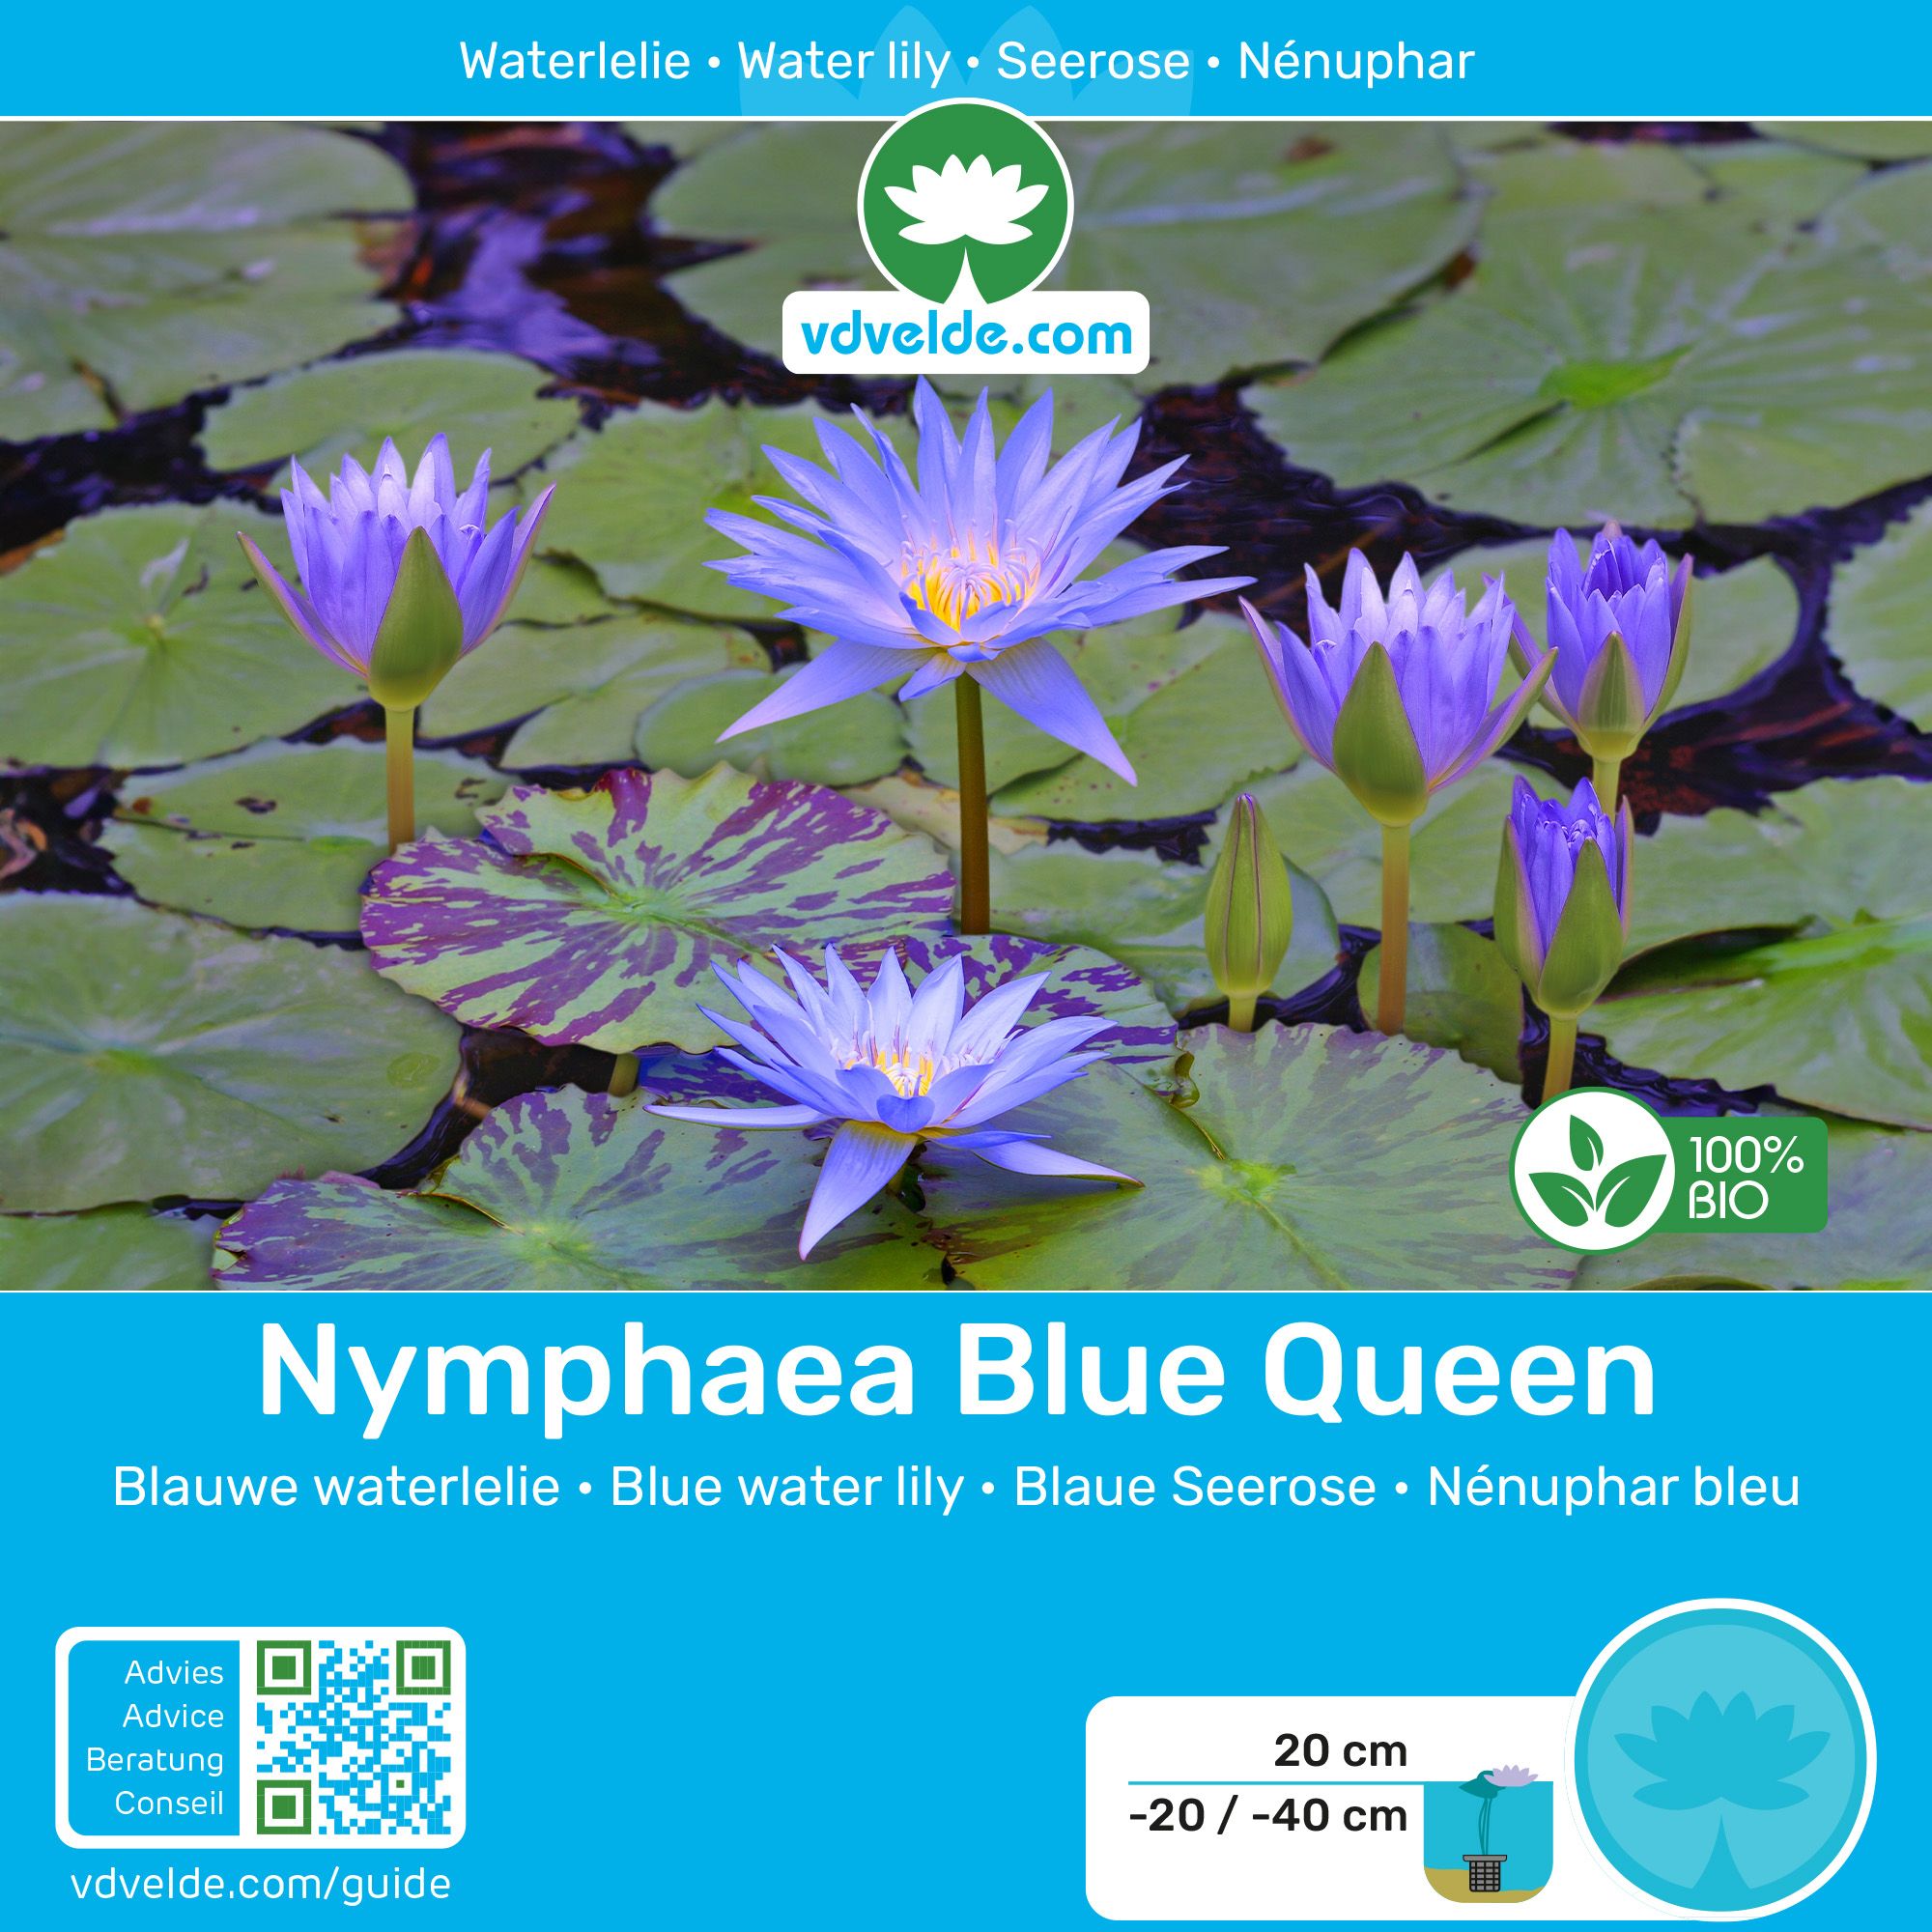 Winterharde-Blauwe-Waterlelie-Nymphaea-Blue-Queen-2